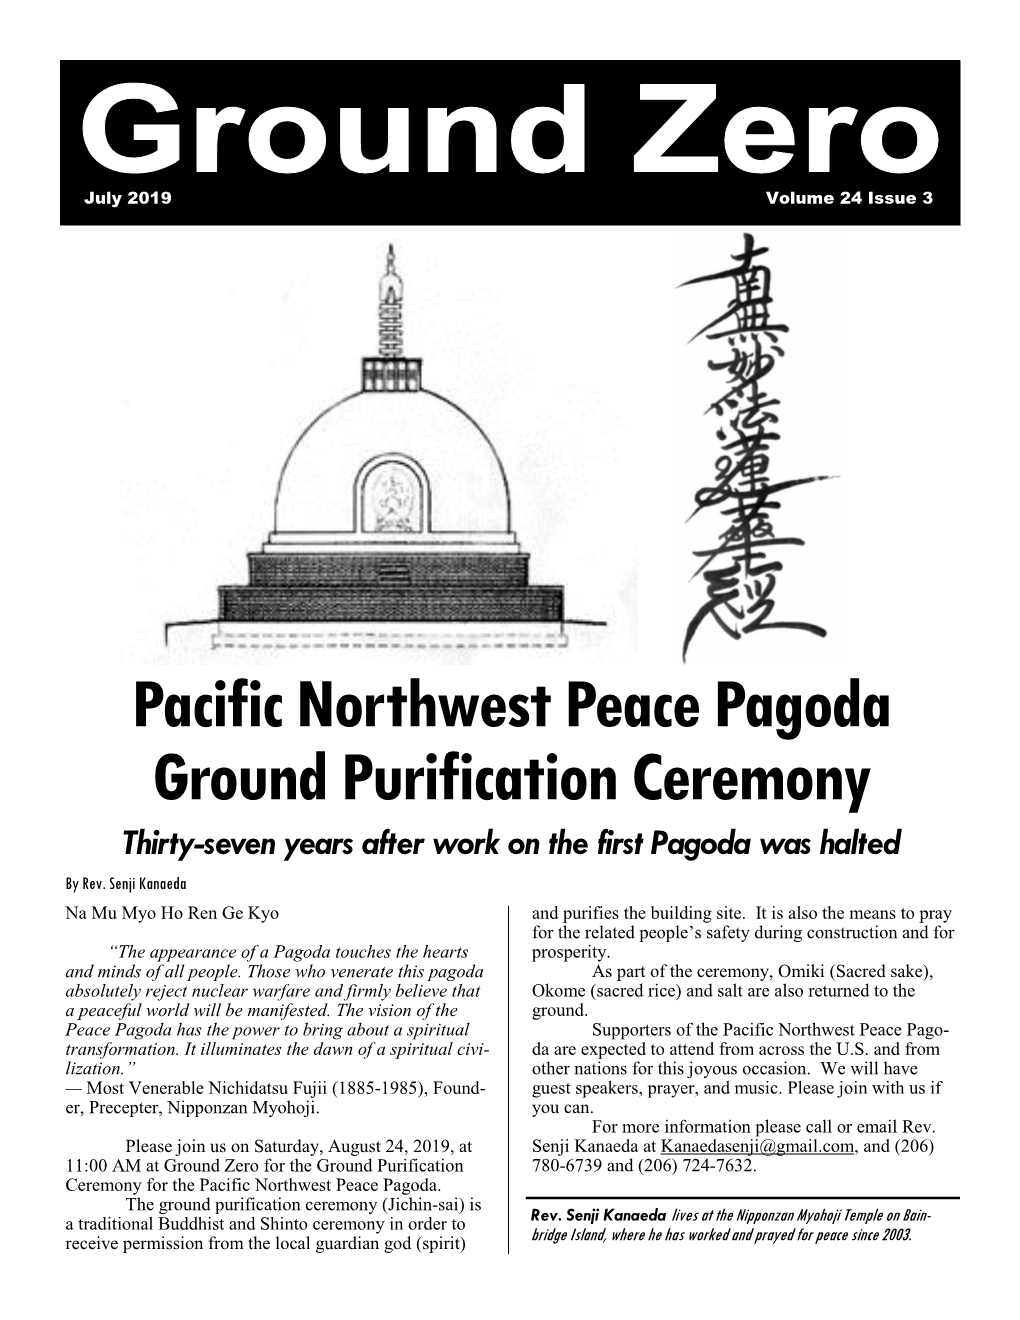 Pacific Northwest Peace Pagoda Ground Purification Ceremony